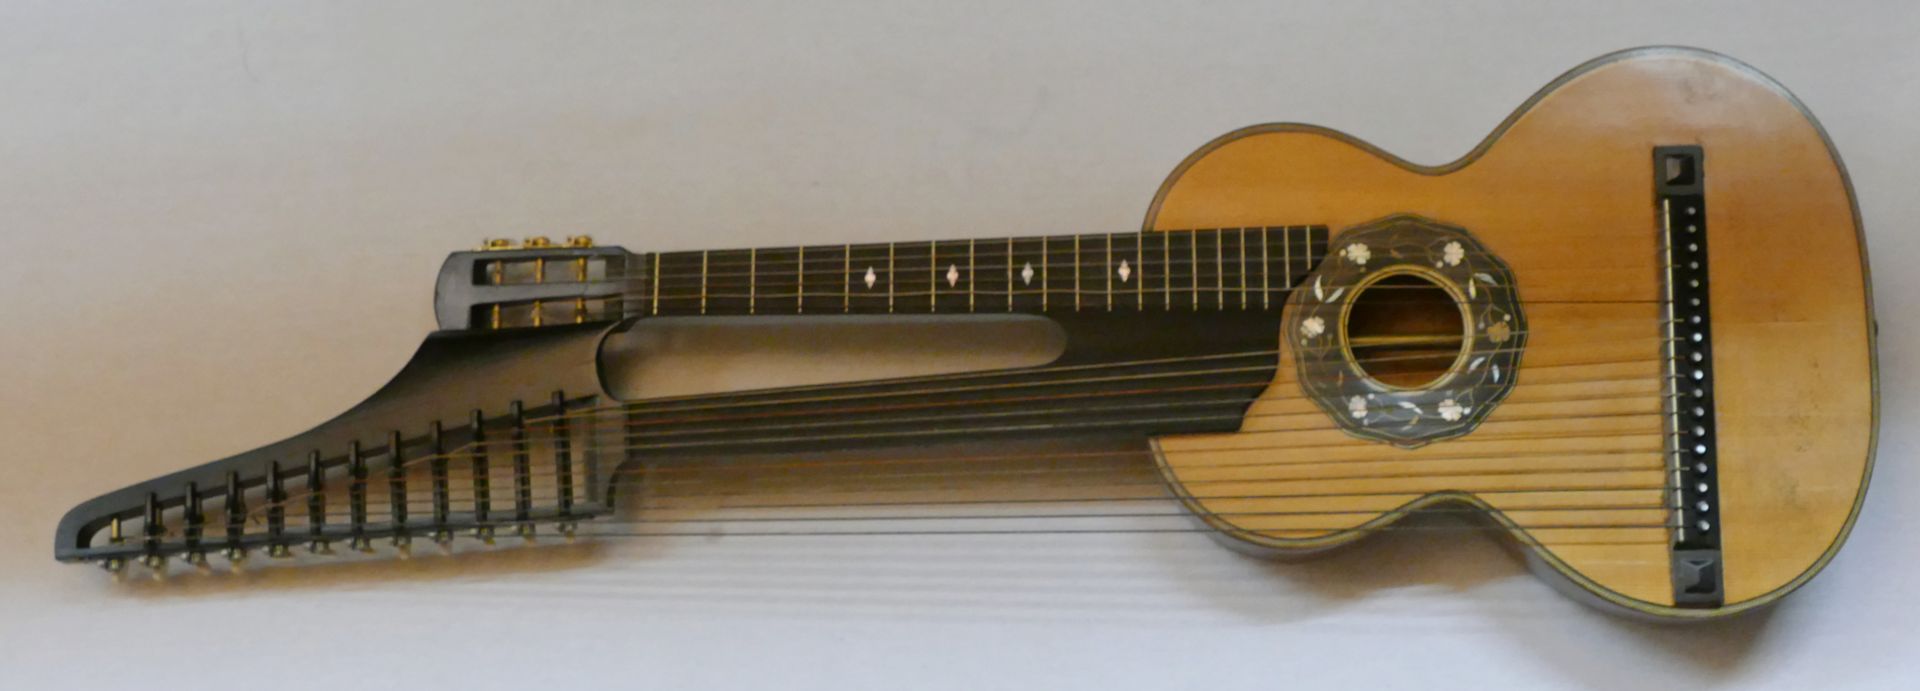 1 Schrammel-/Kontragitarre 18-saitig, ca. L 120cm ber., mit bemaltem Holztransportkoffer ca. 16x130x